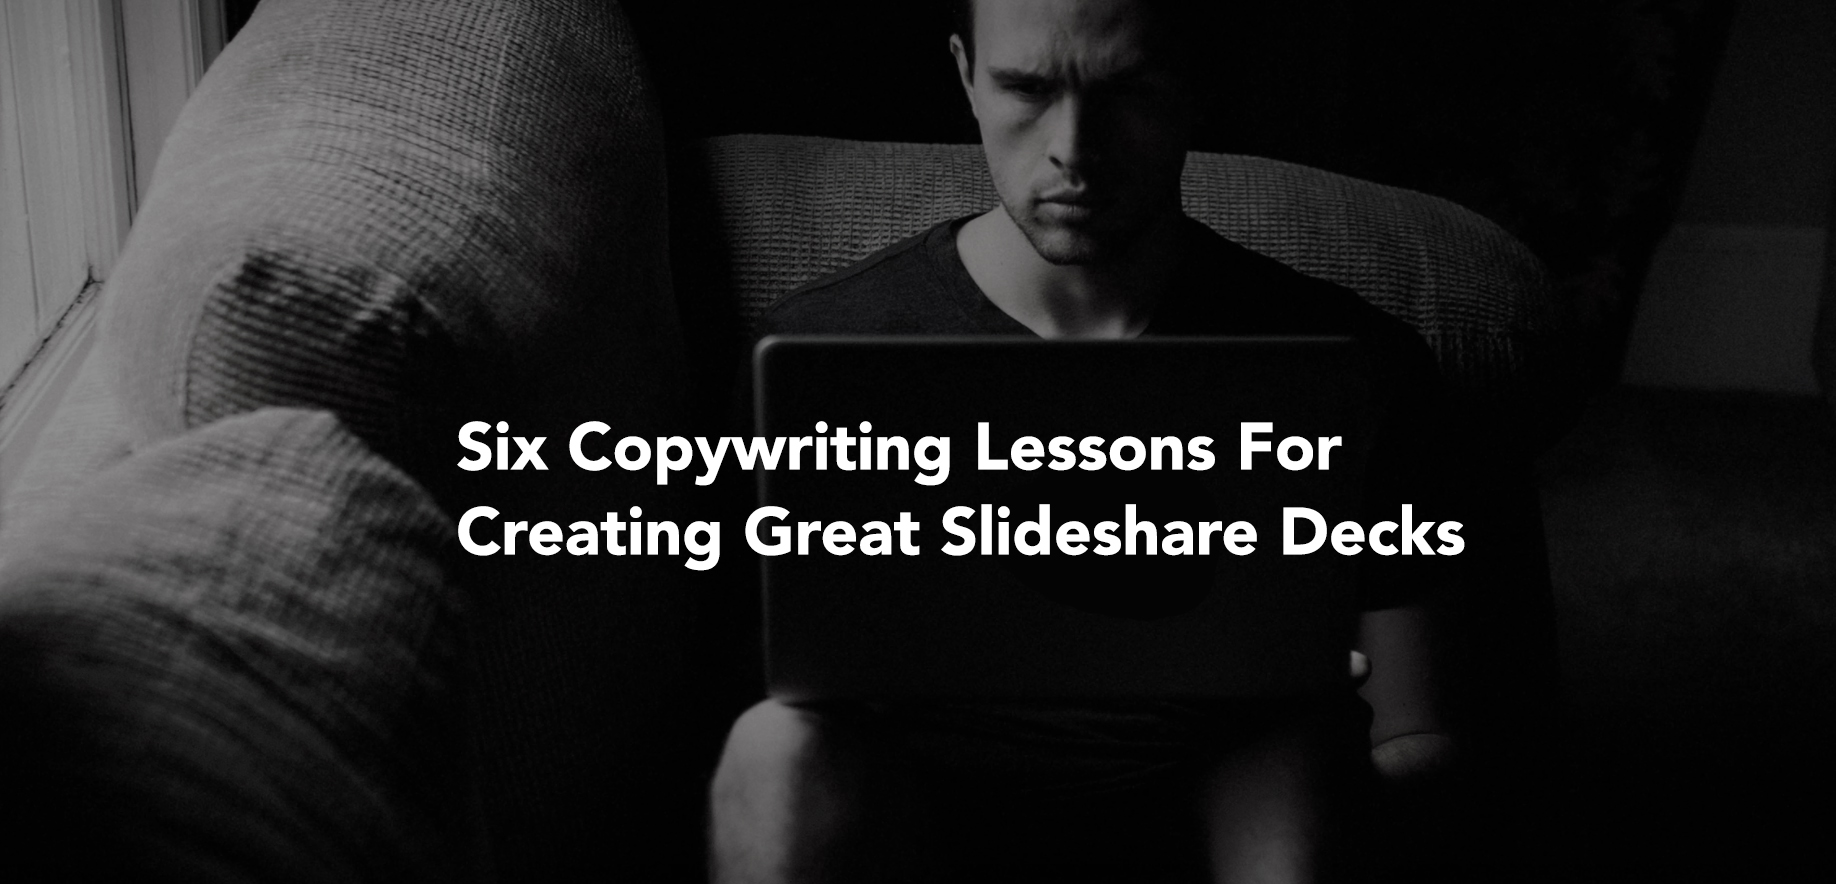 Six Copywriting Tips That Will Help You Make Great Slideshare Decks